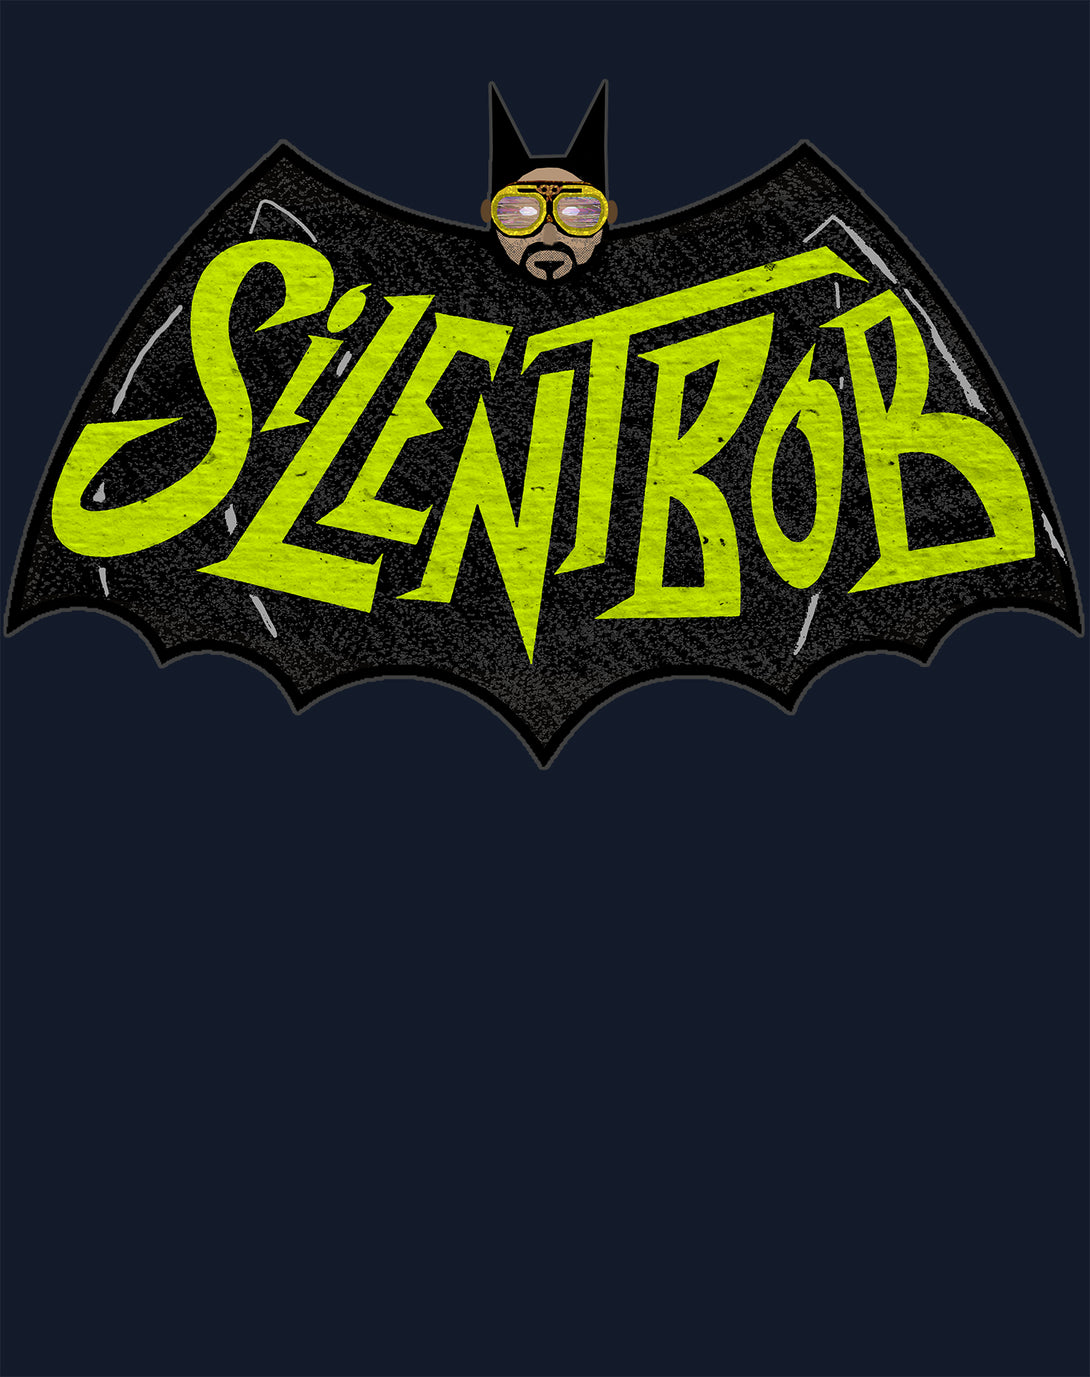 Kevin Smith View Askewniverse Logo Silent Bat Bob Official Men's T-Shirt Navy - Urban Species Design Close Up